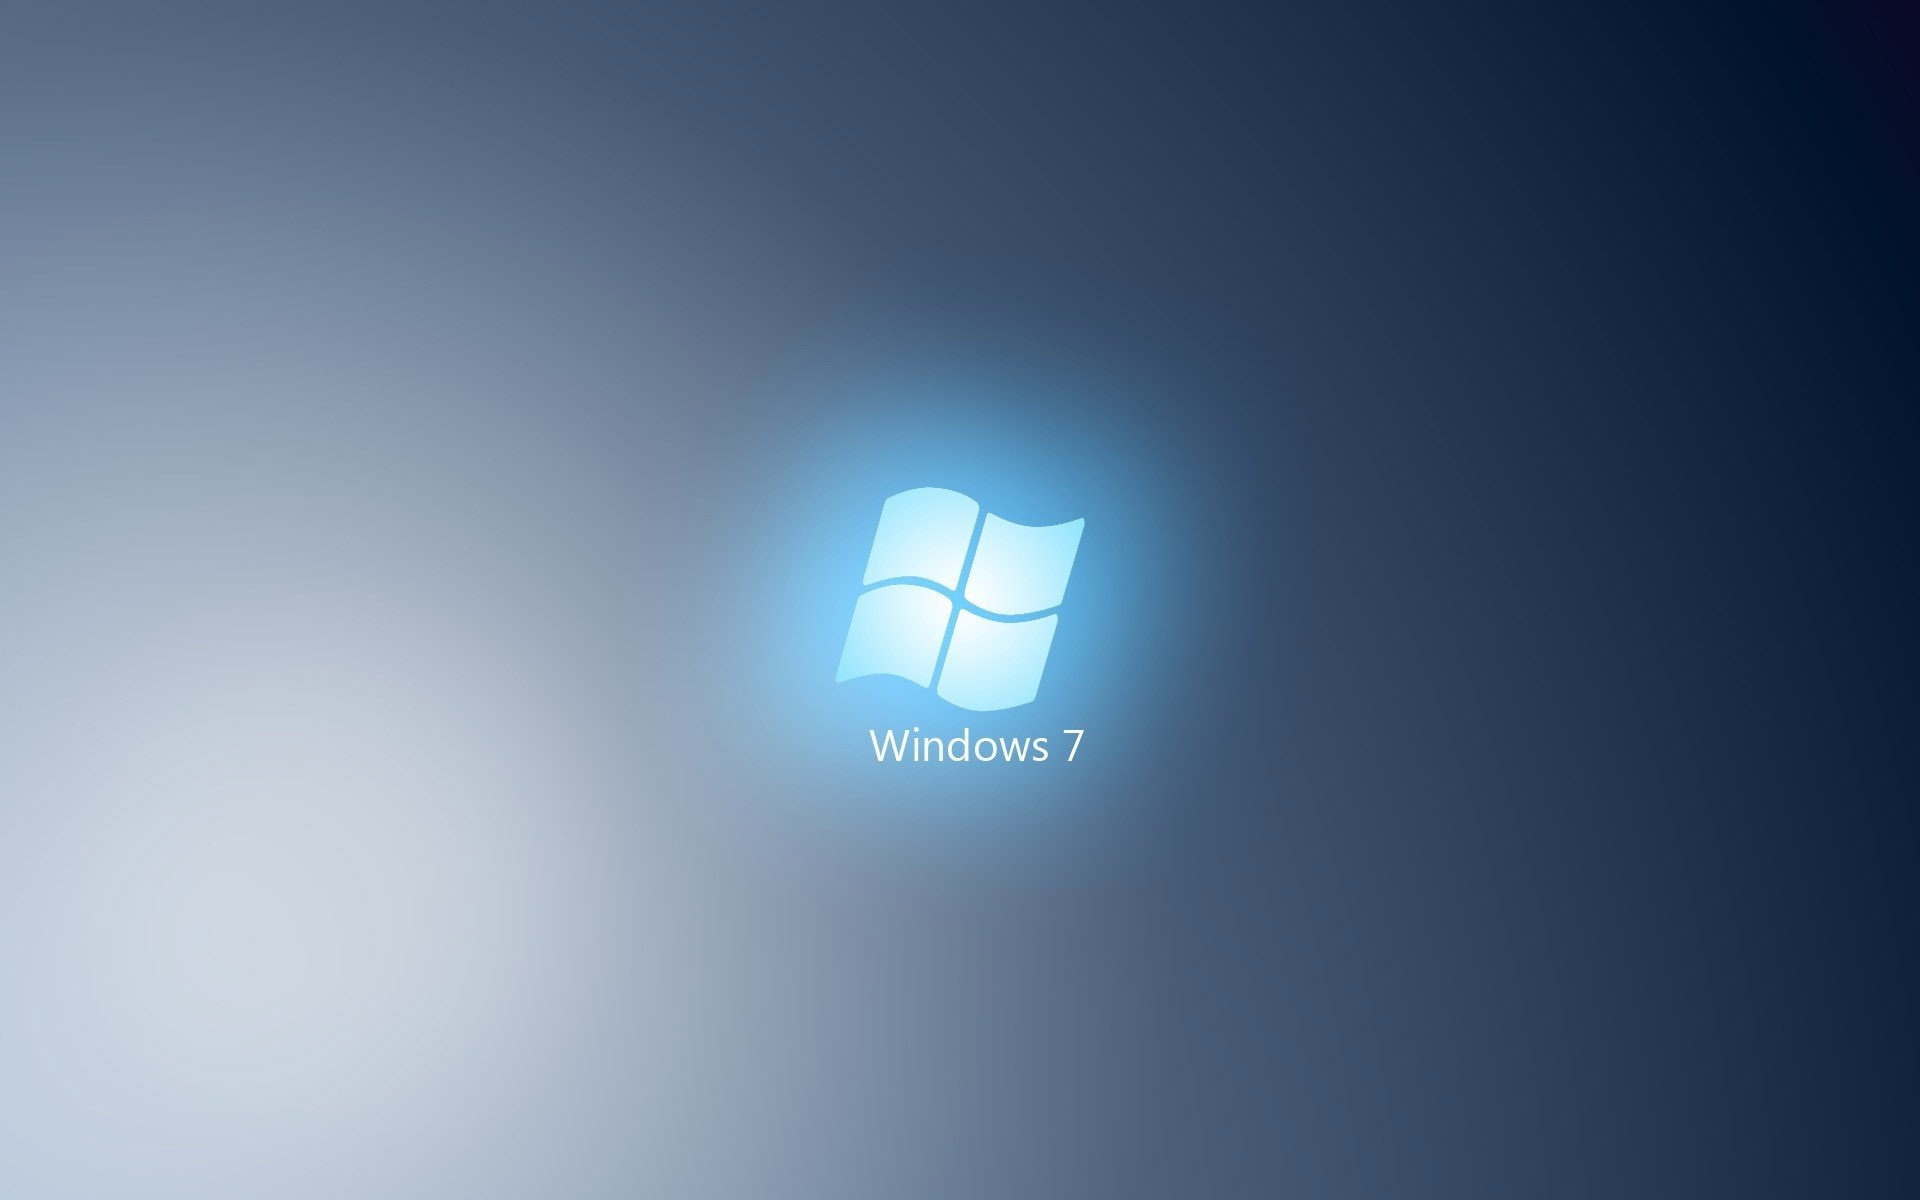 Логотип Виндоус семь на голубом сияющем фоне